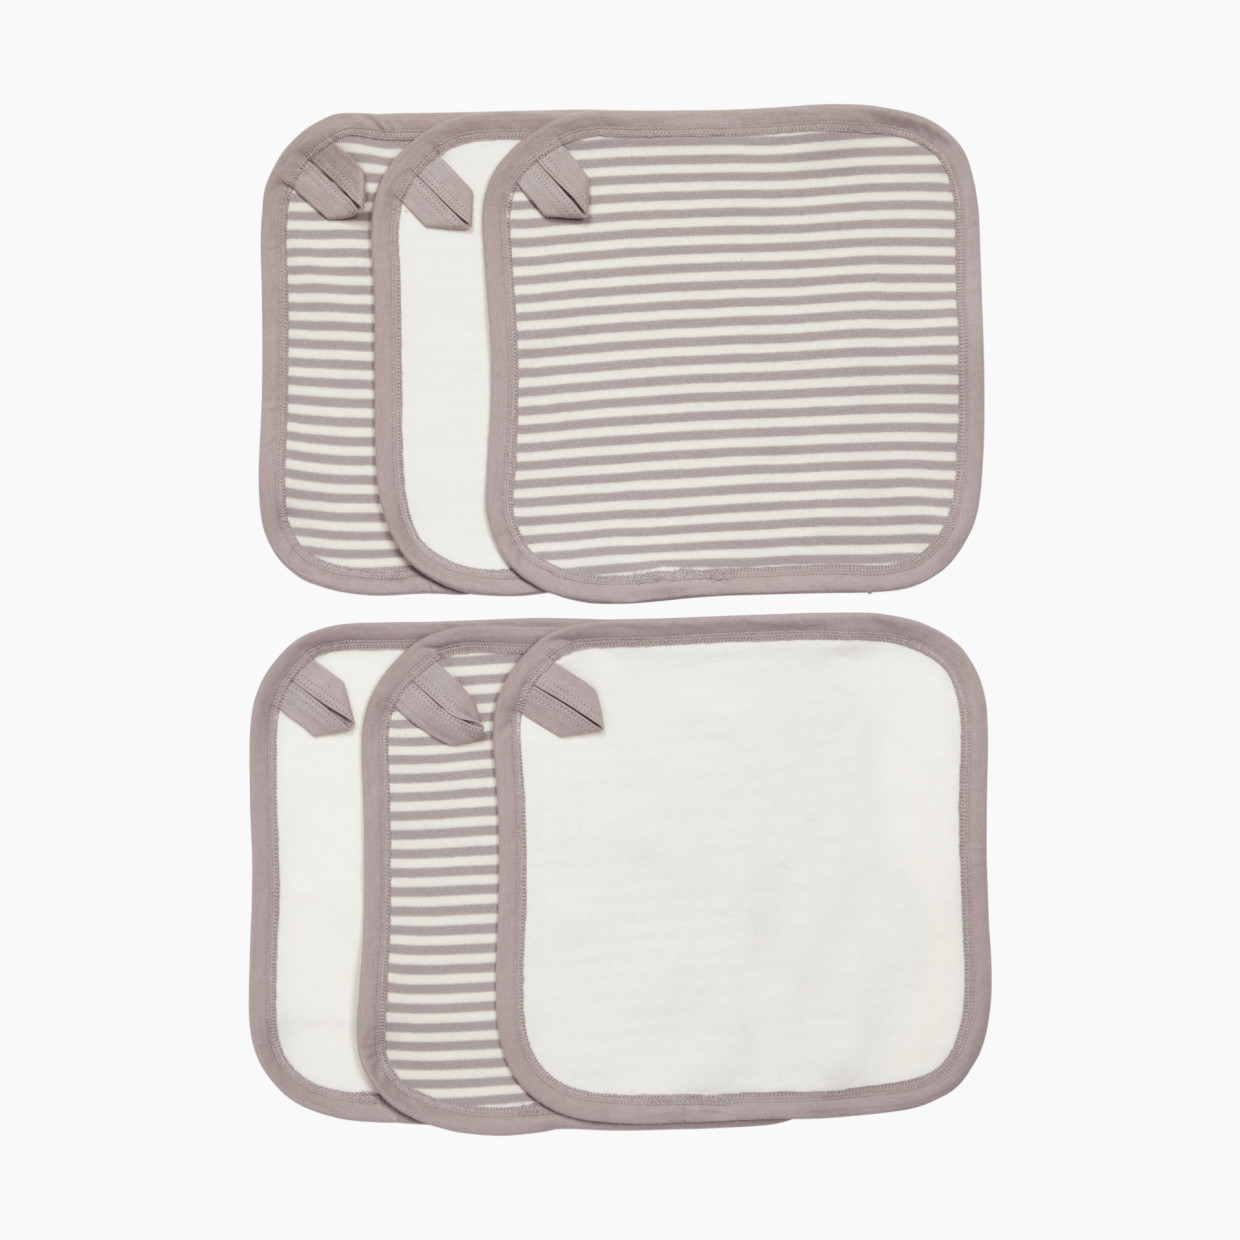 Small Story Washcloth (6 Pack) - Grey Stripe.